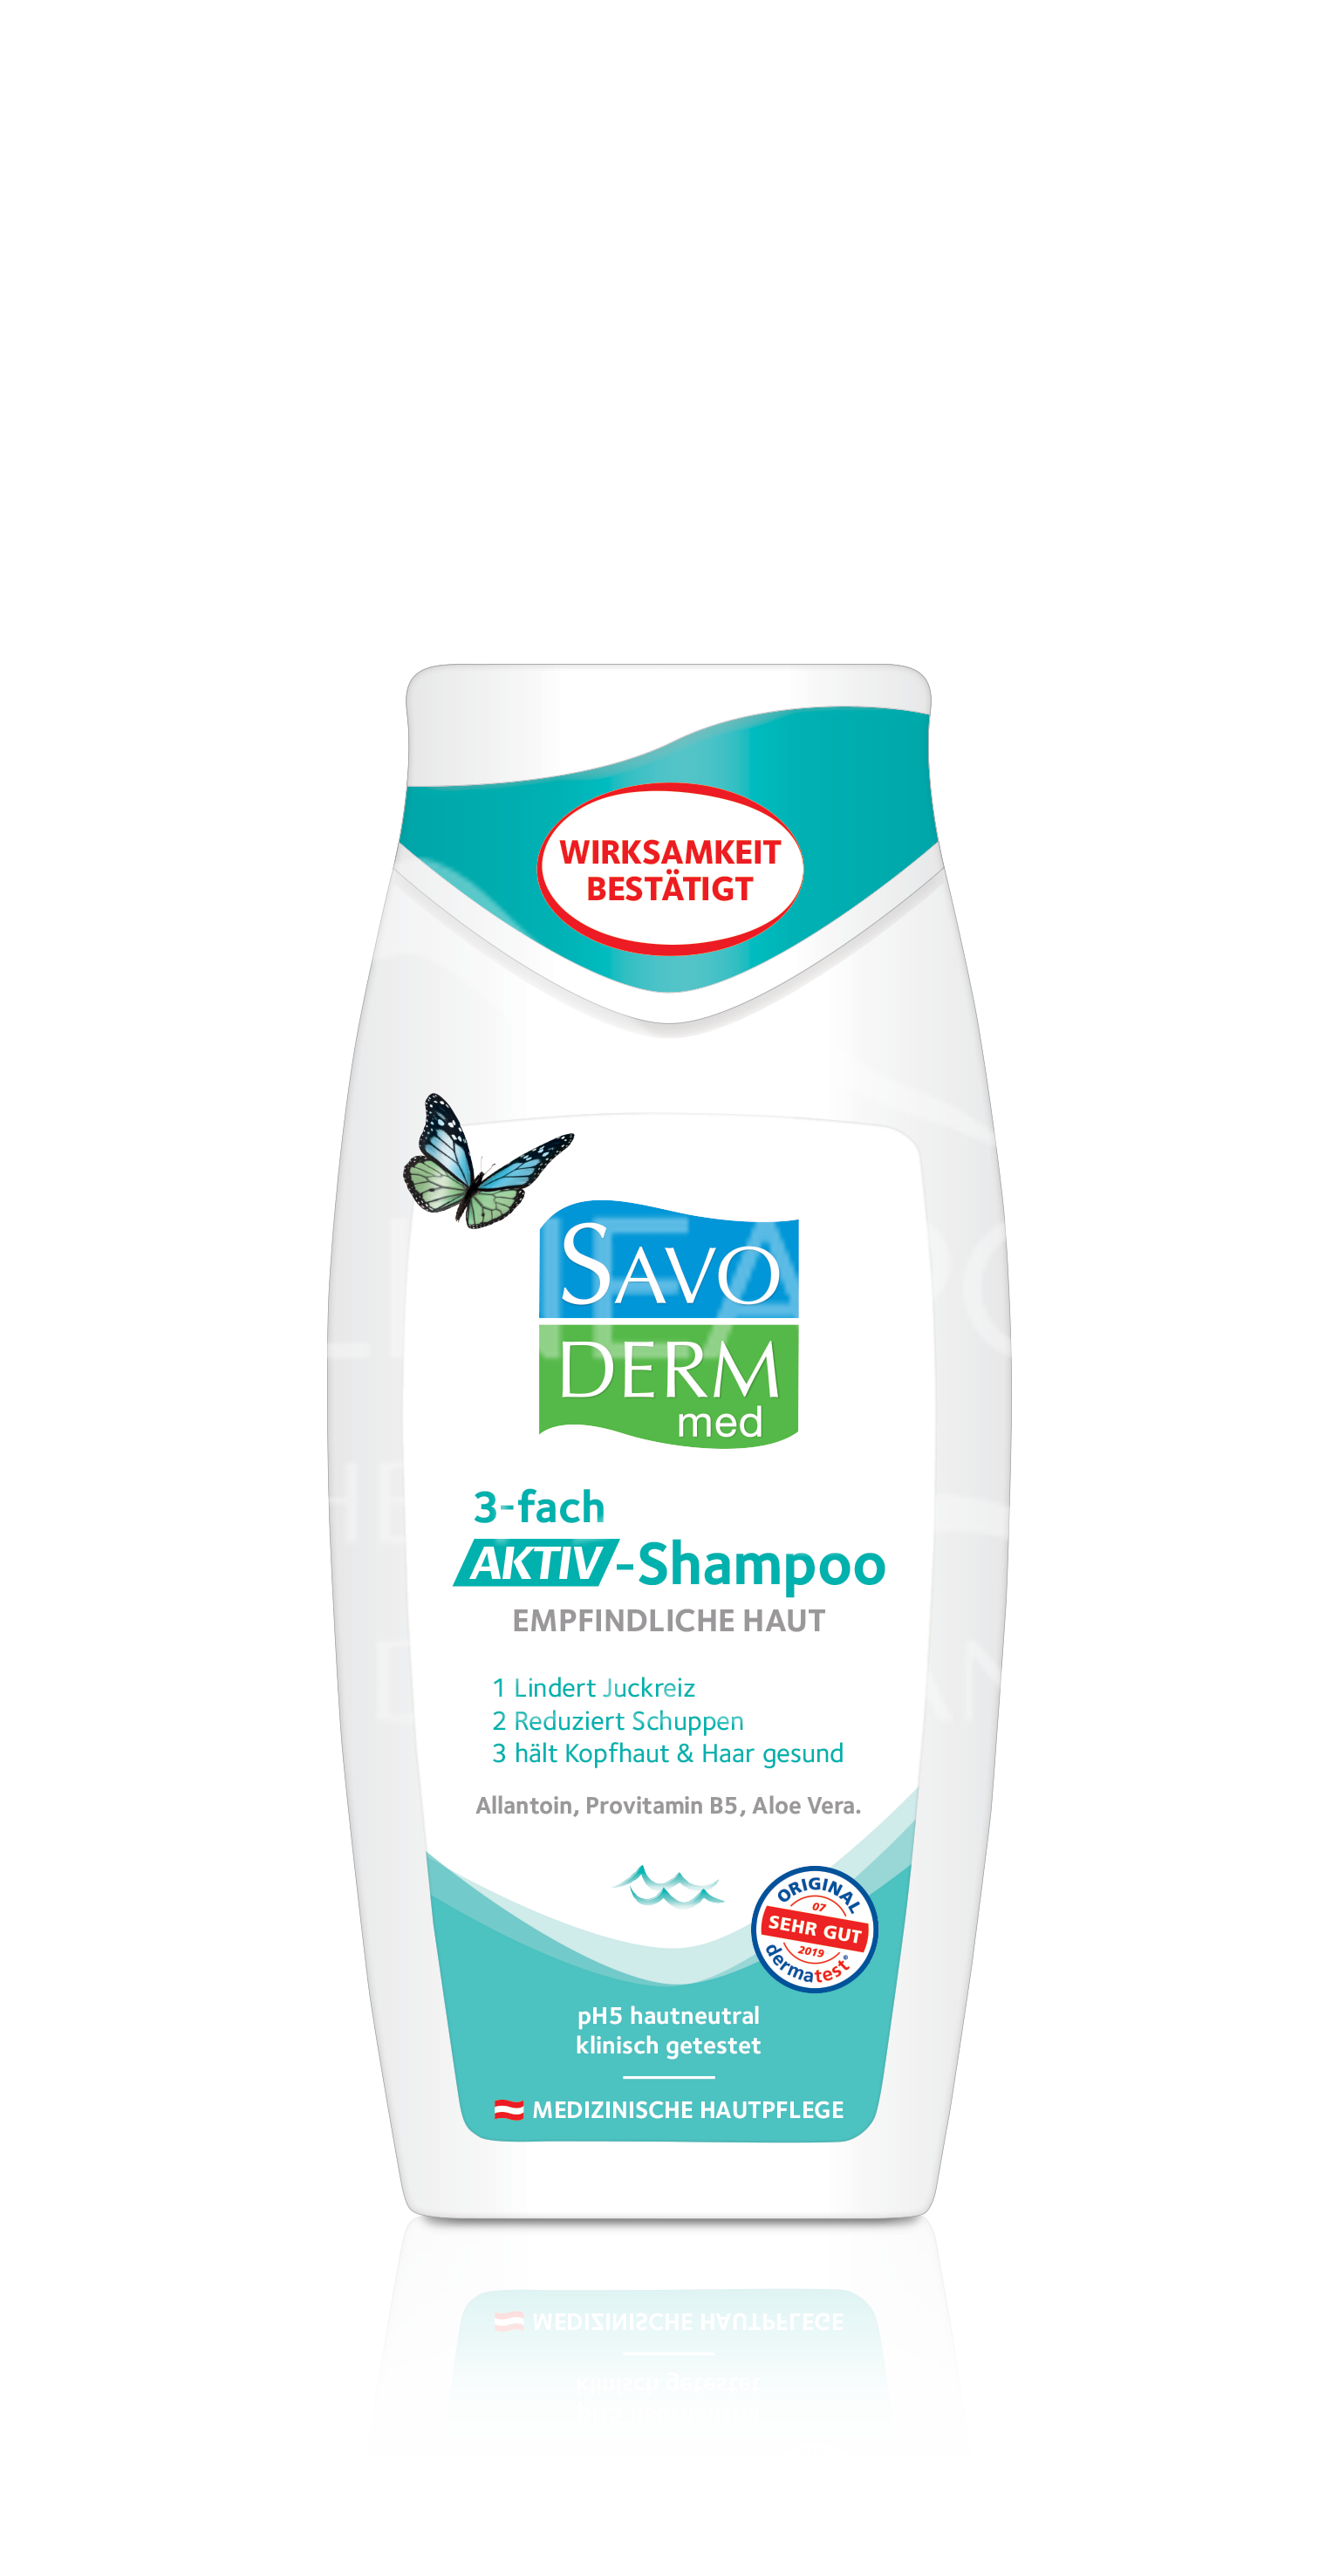 Savoderm med 3-fach Aktiv-Shampoo